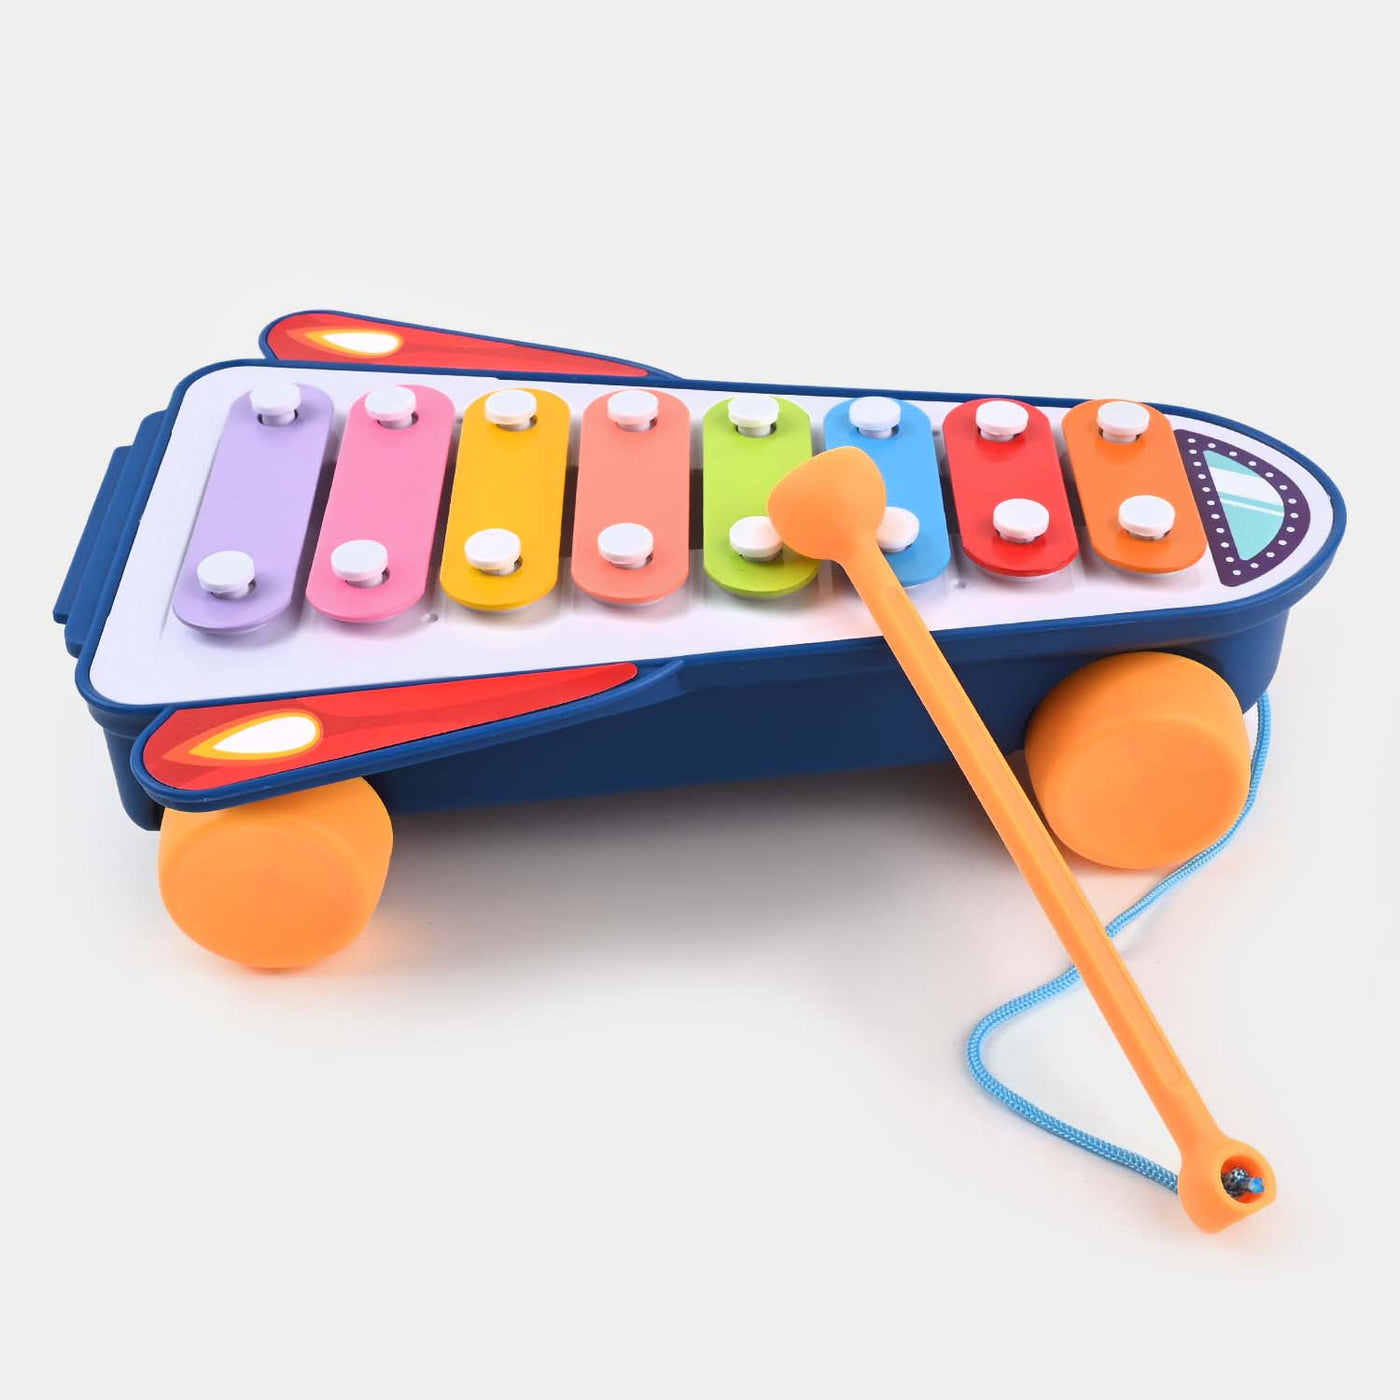 Happy Rocket Piano For Kids